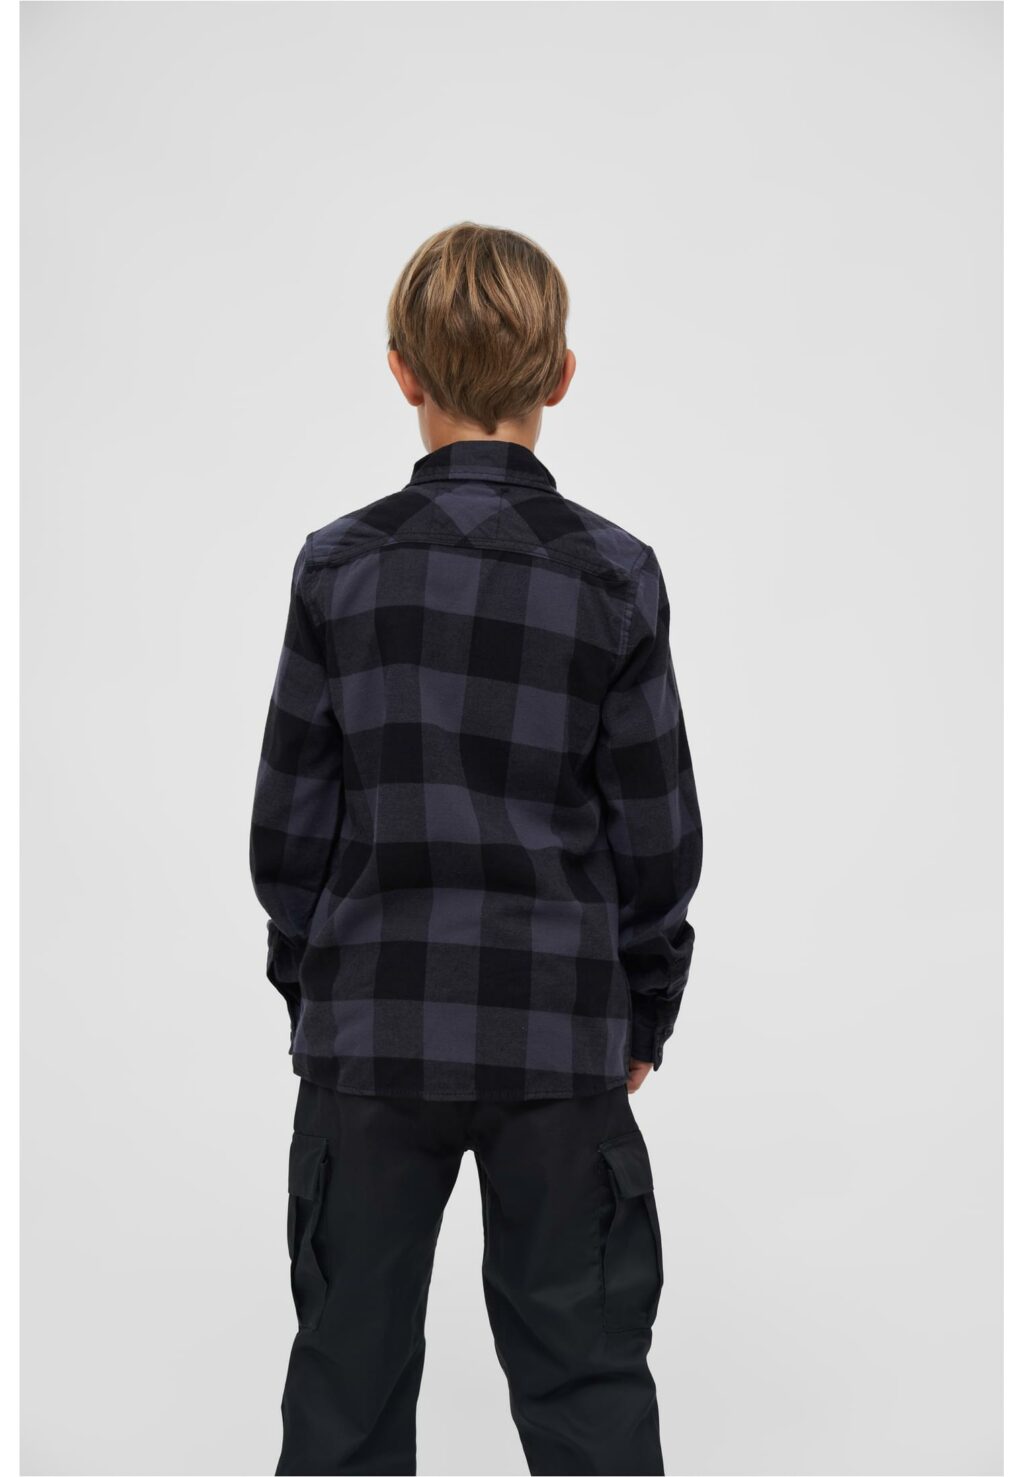 Brandit Checkshirt Kids black/grey BD6016